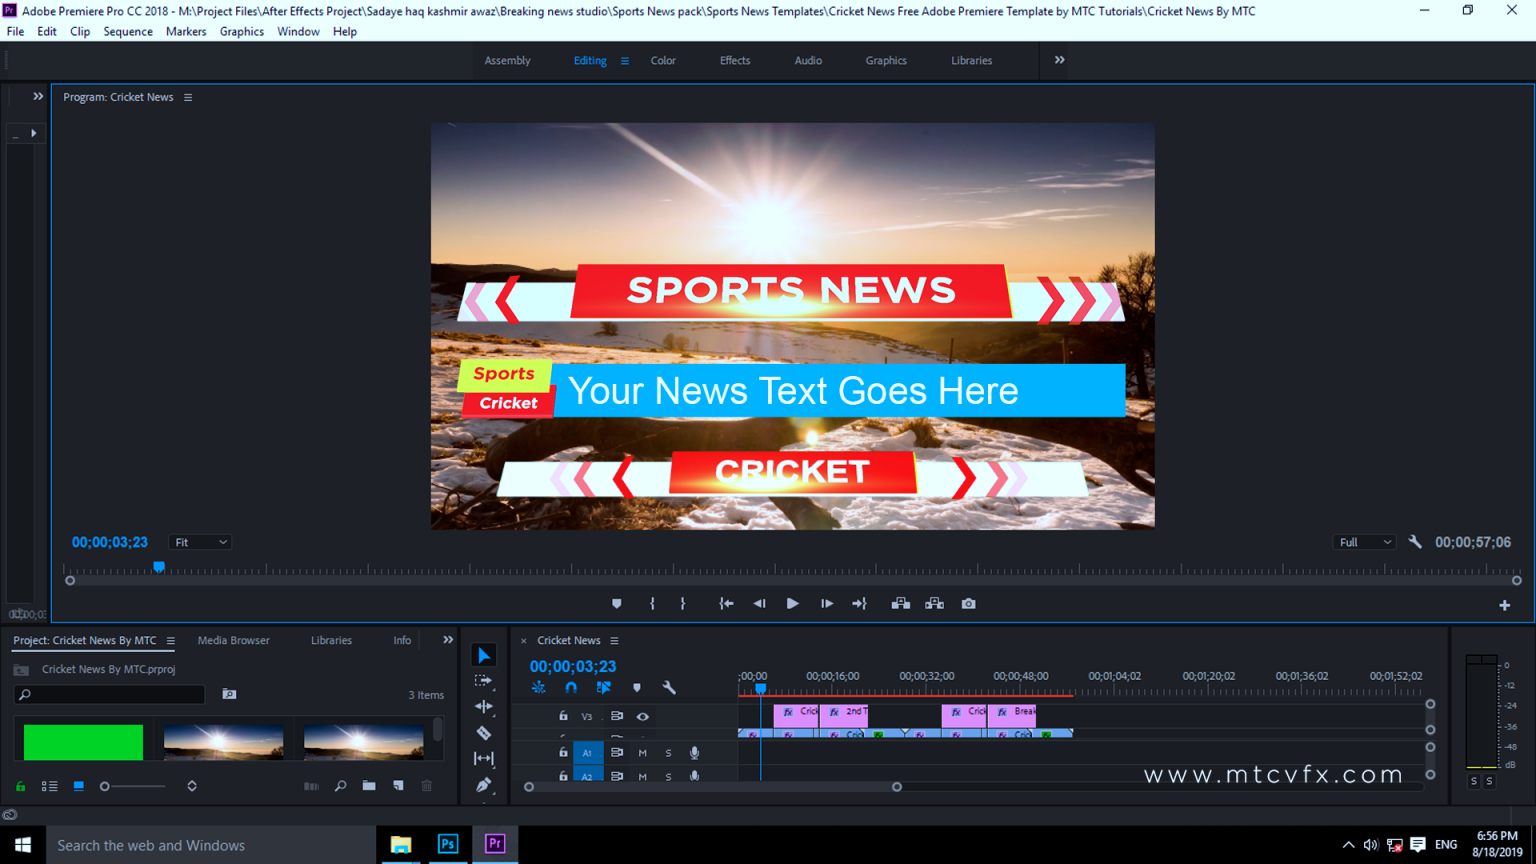 Download Free Cricket News Adobe Premiere Template MTC TUTORIALS